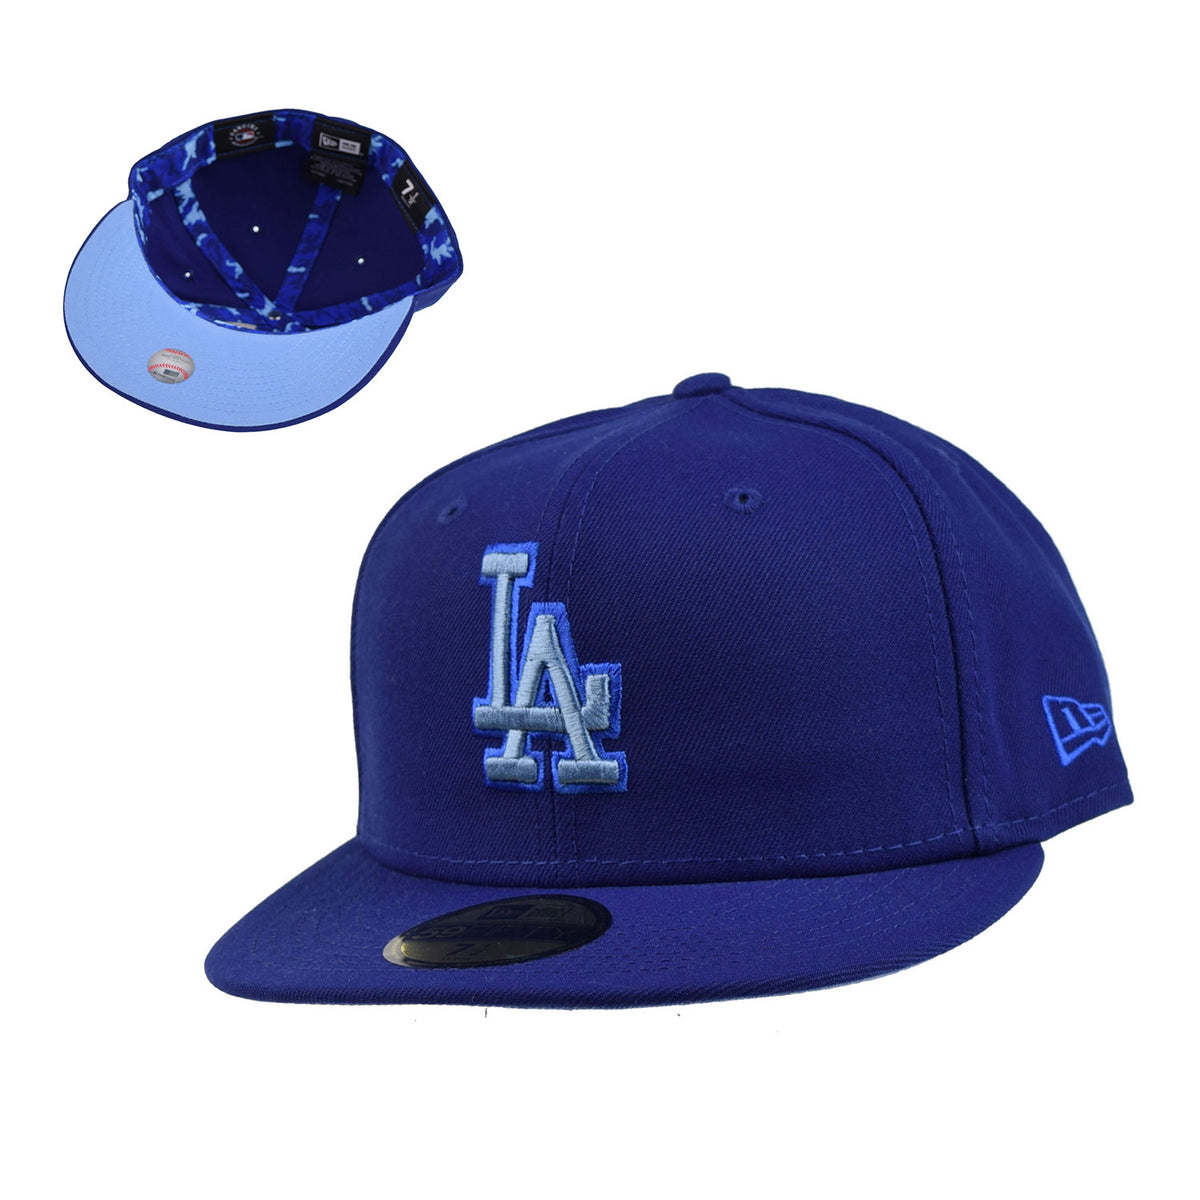 Los Angeles Dodgers Mens Sweatshirt New Era Light Blue Black Hoodie